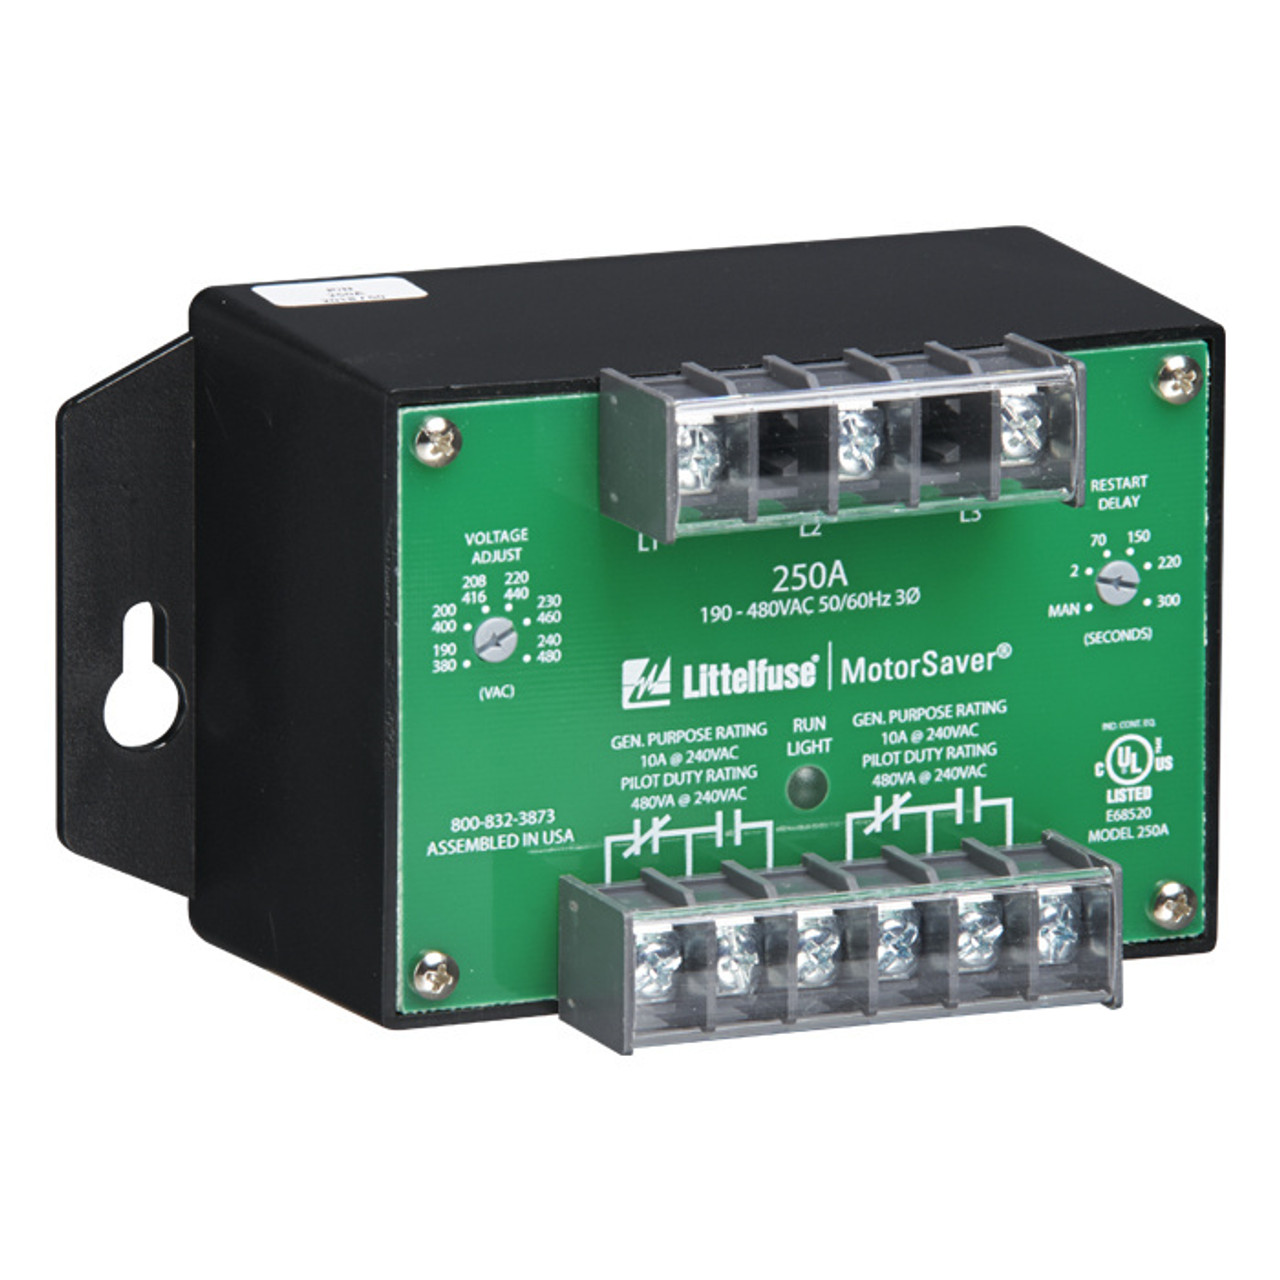 Littelfuse-Symcom 250A Voltage Monitor Relays